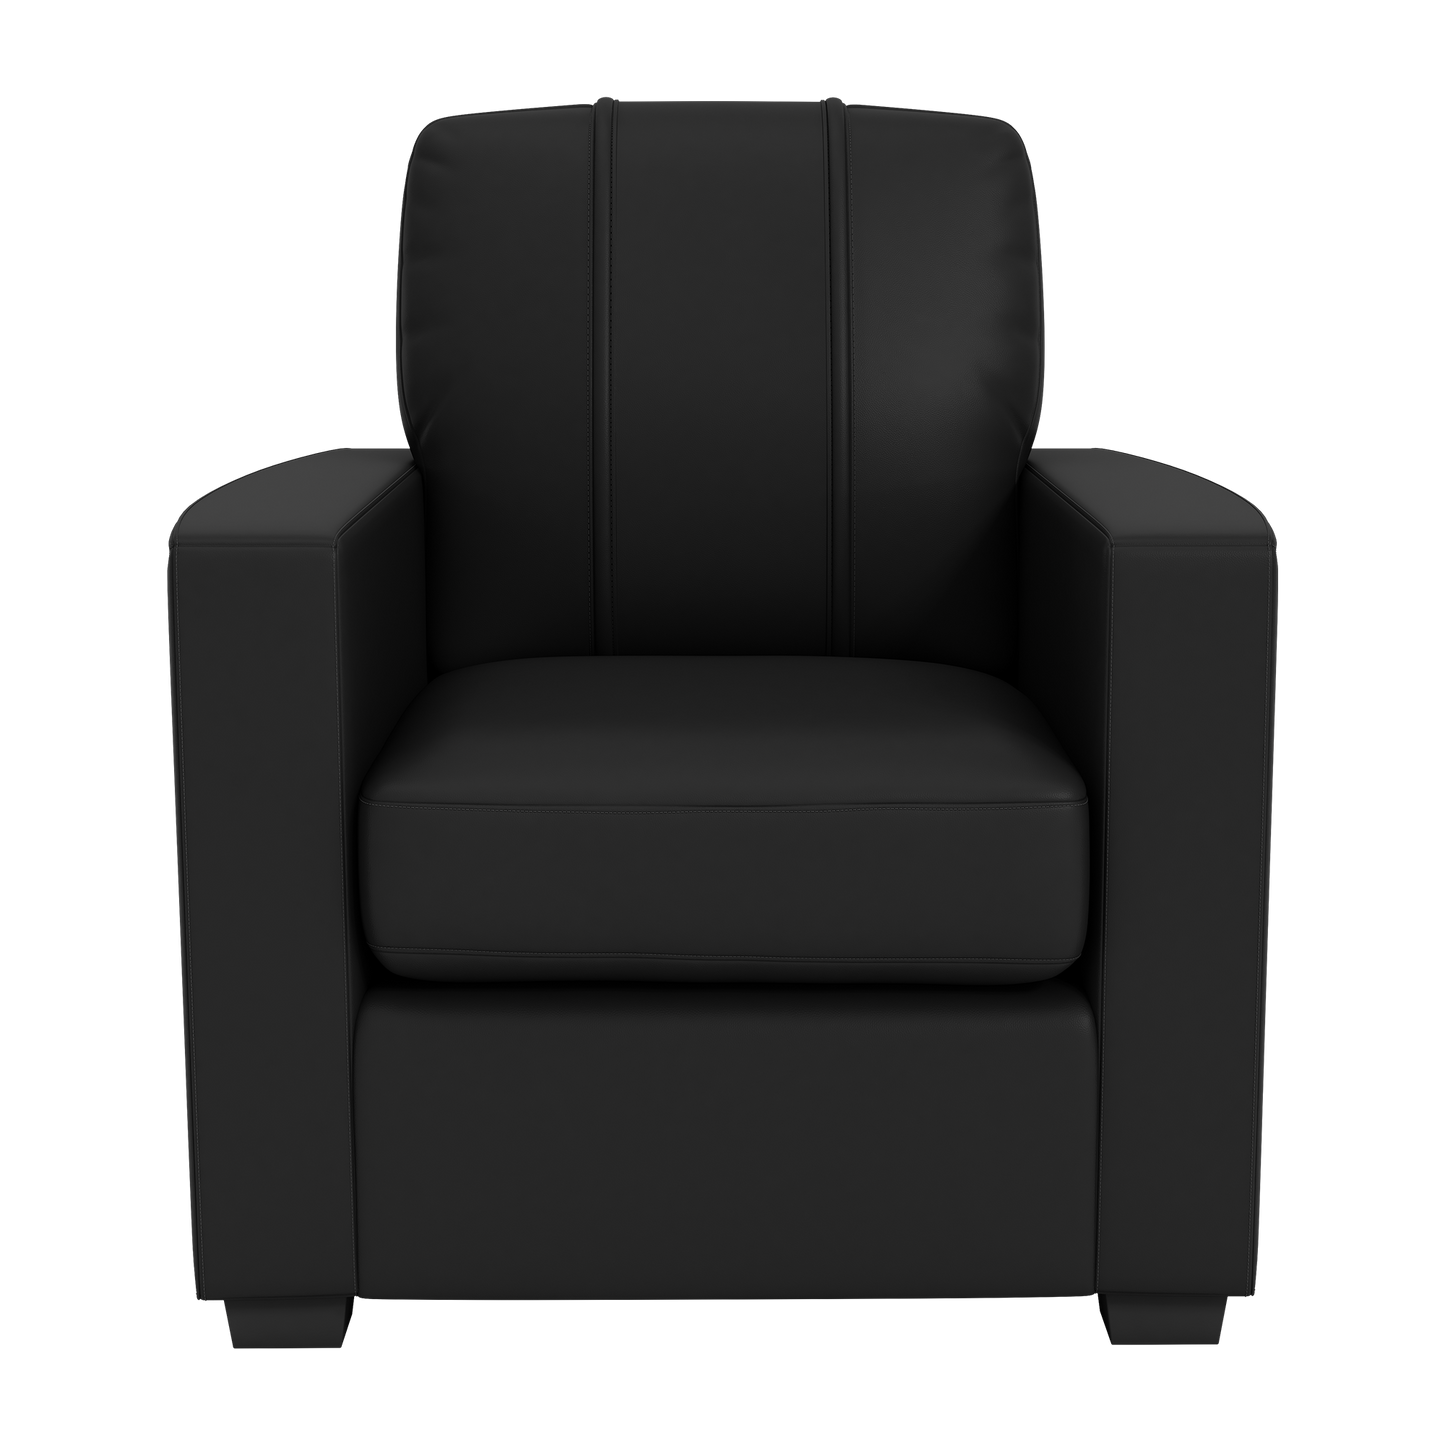 Silver Club Chair with Boston Celtics Logo